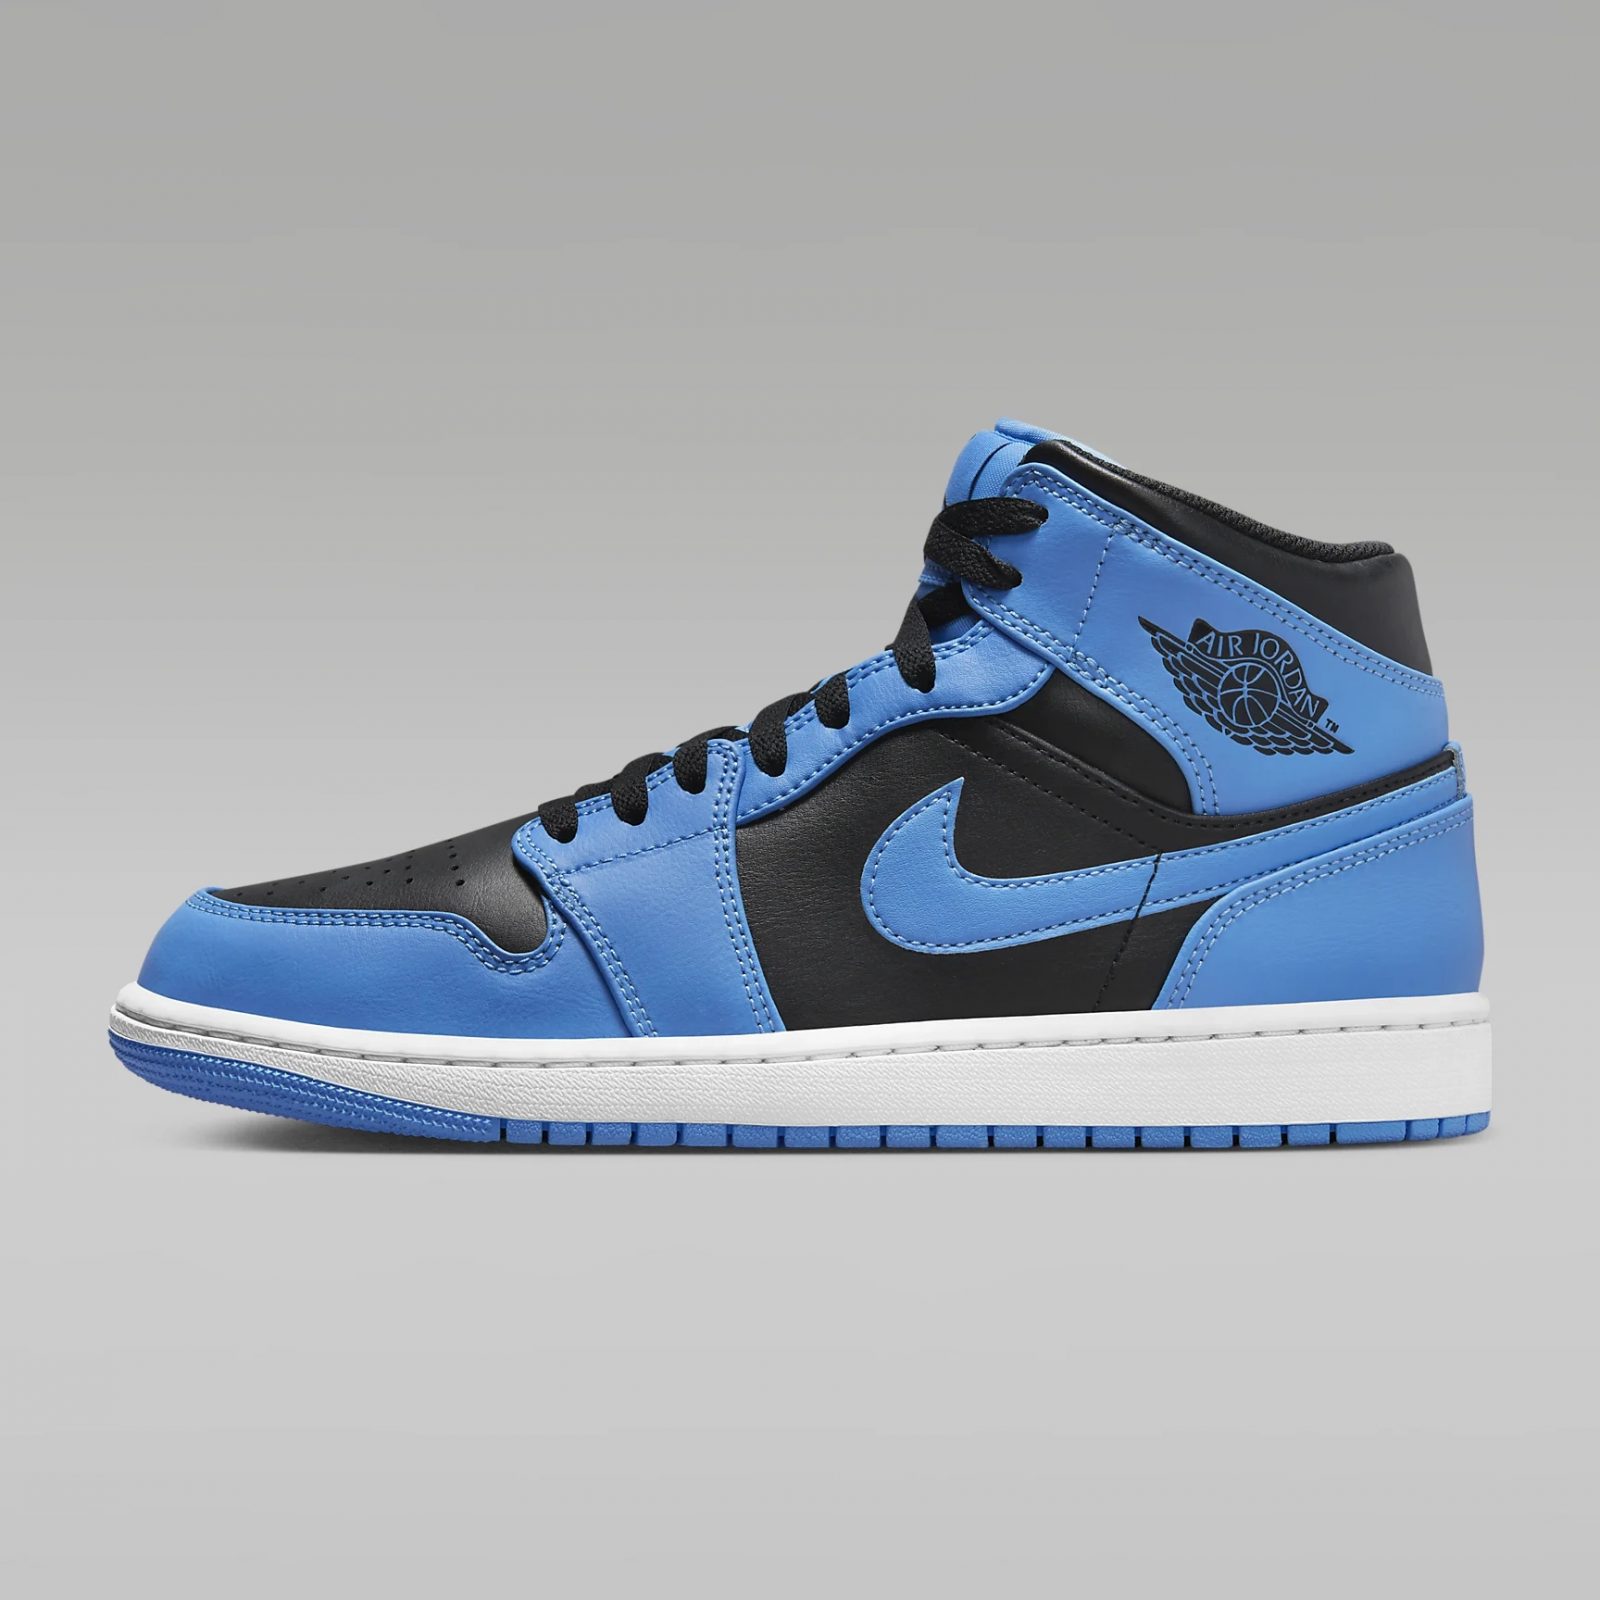 Nike รองเท้าผ้าใบผู้ชาย Air Jordan 1 Mid University Blueblackwhite Dq8426 401 Apx 9400